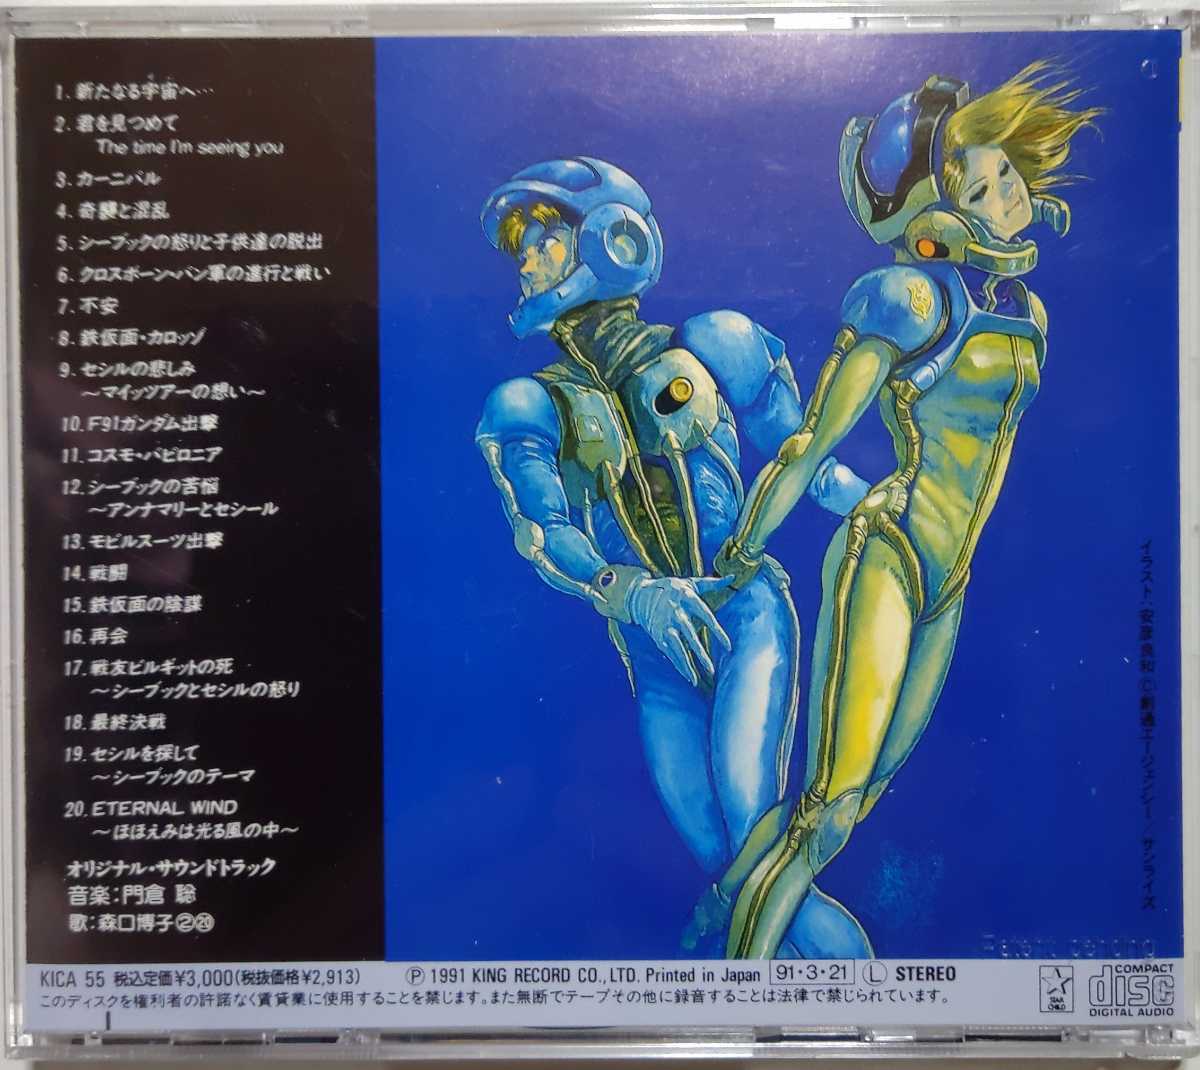  Mobile Suit Gundam F91 original * soundtrack boxed 